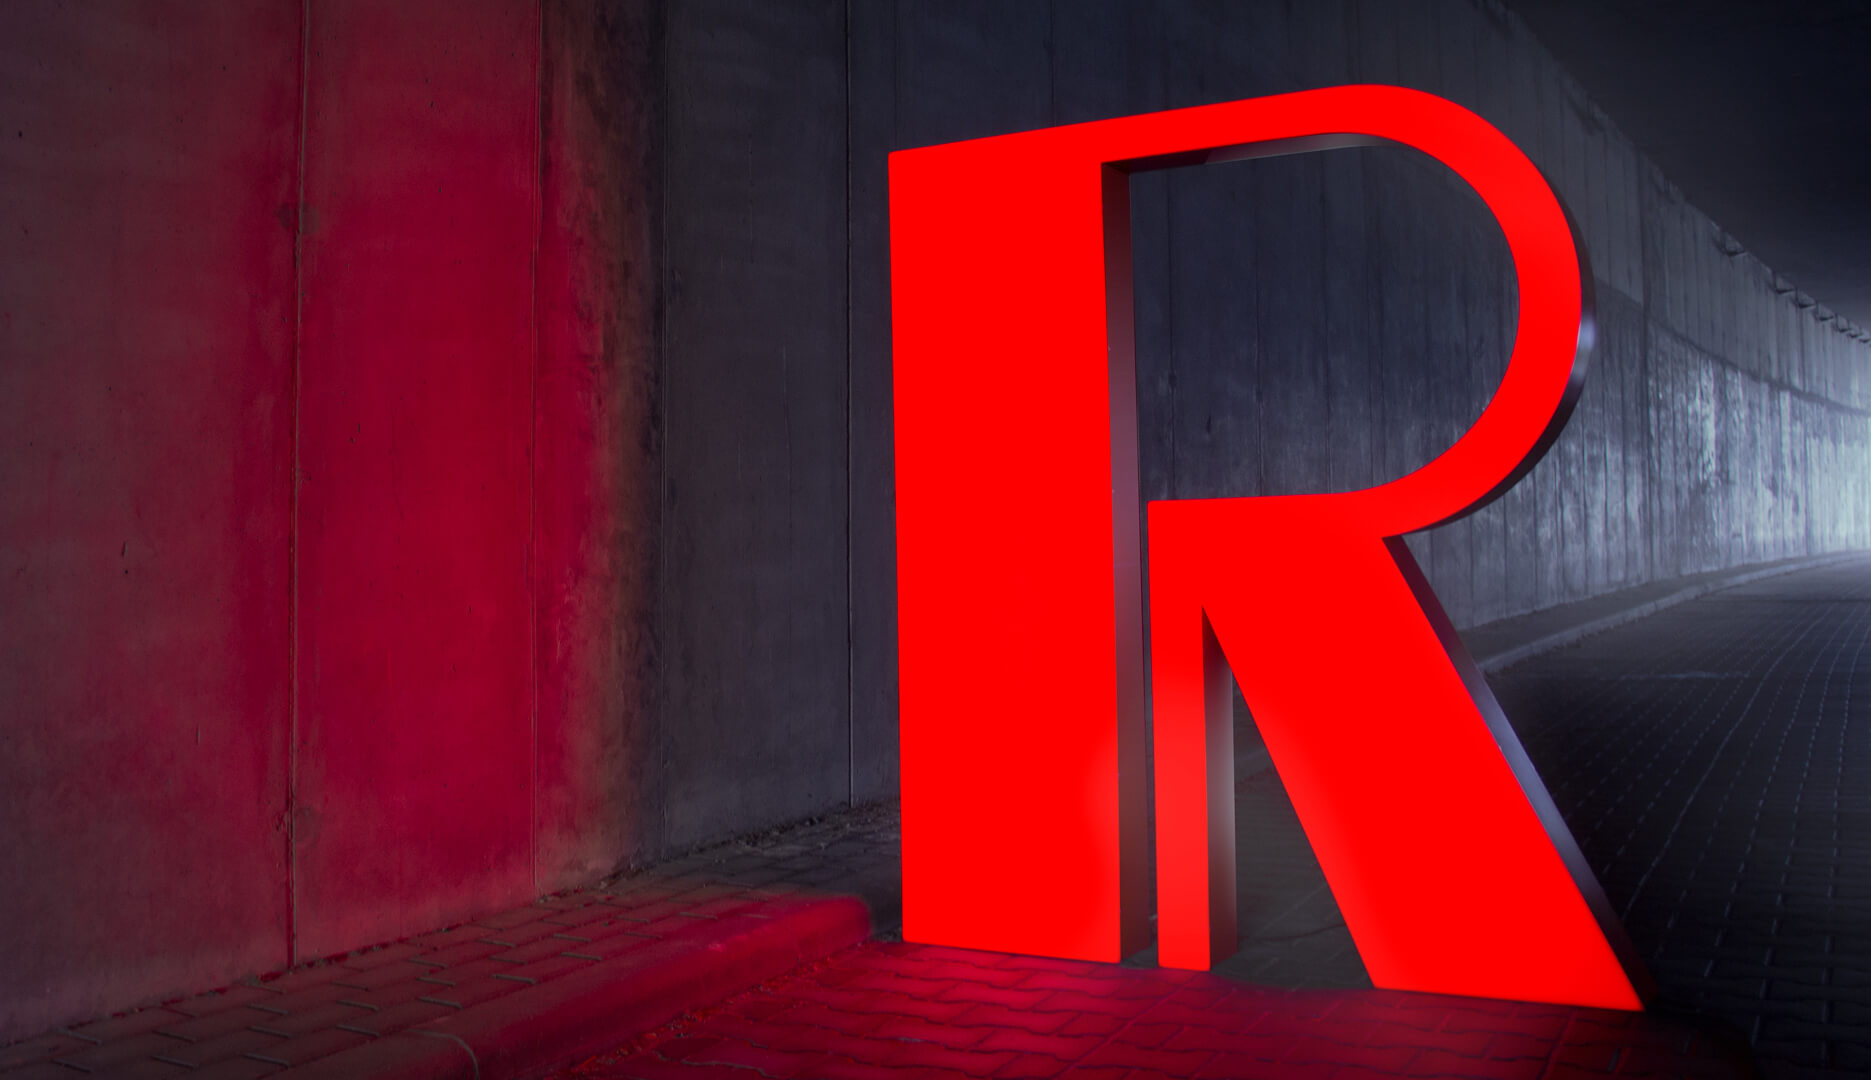 Rode letter R - Groot formaat letter R in rood, met LED-achtergrondverlichting.